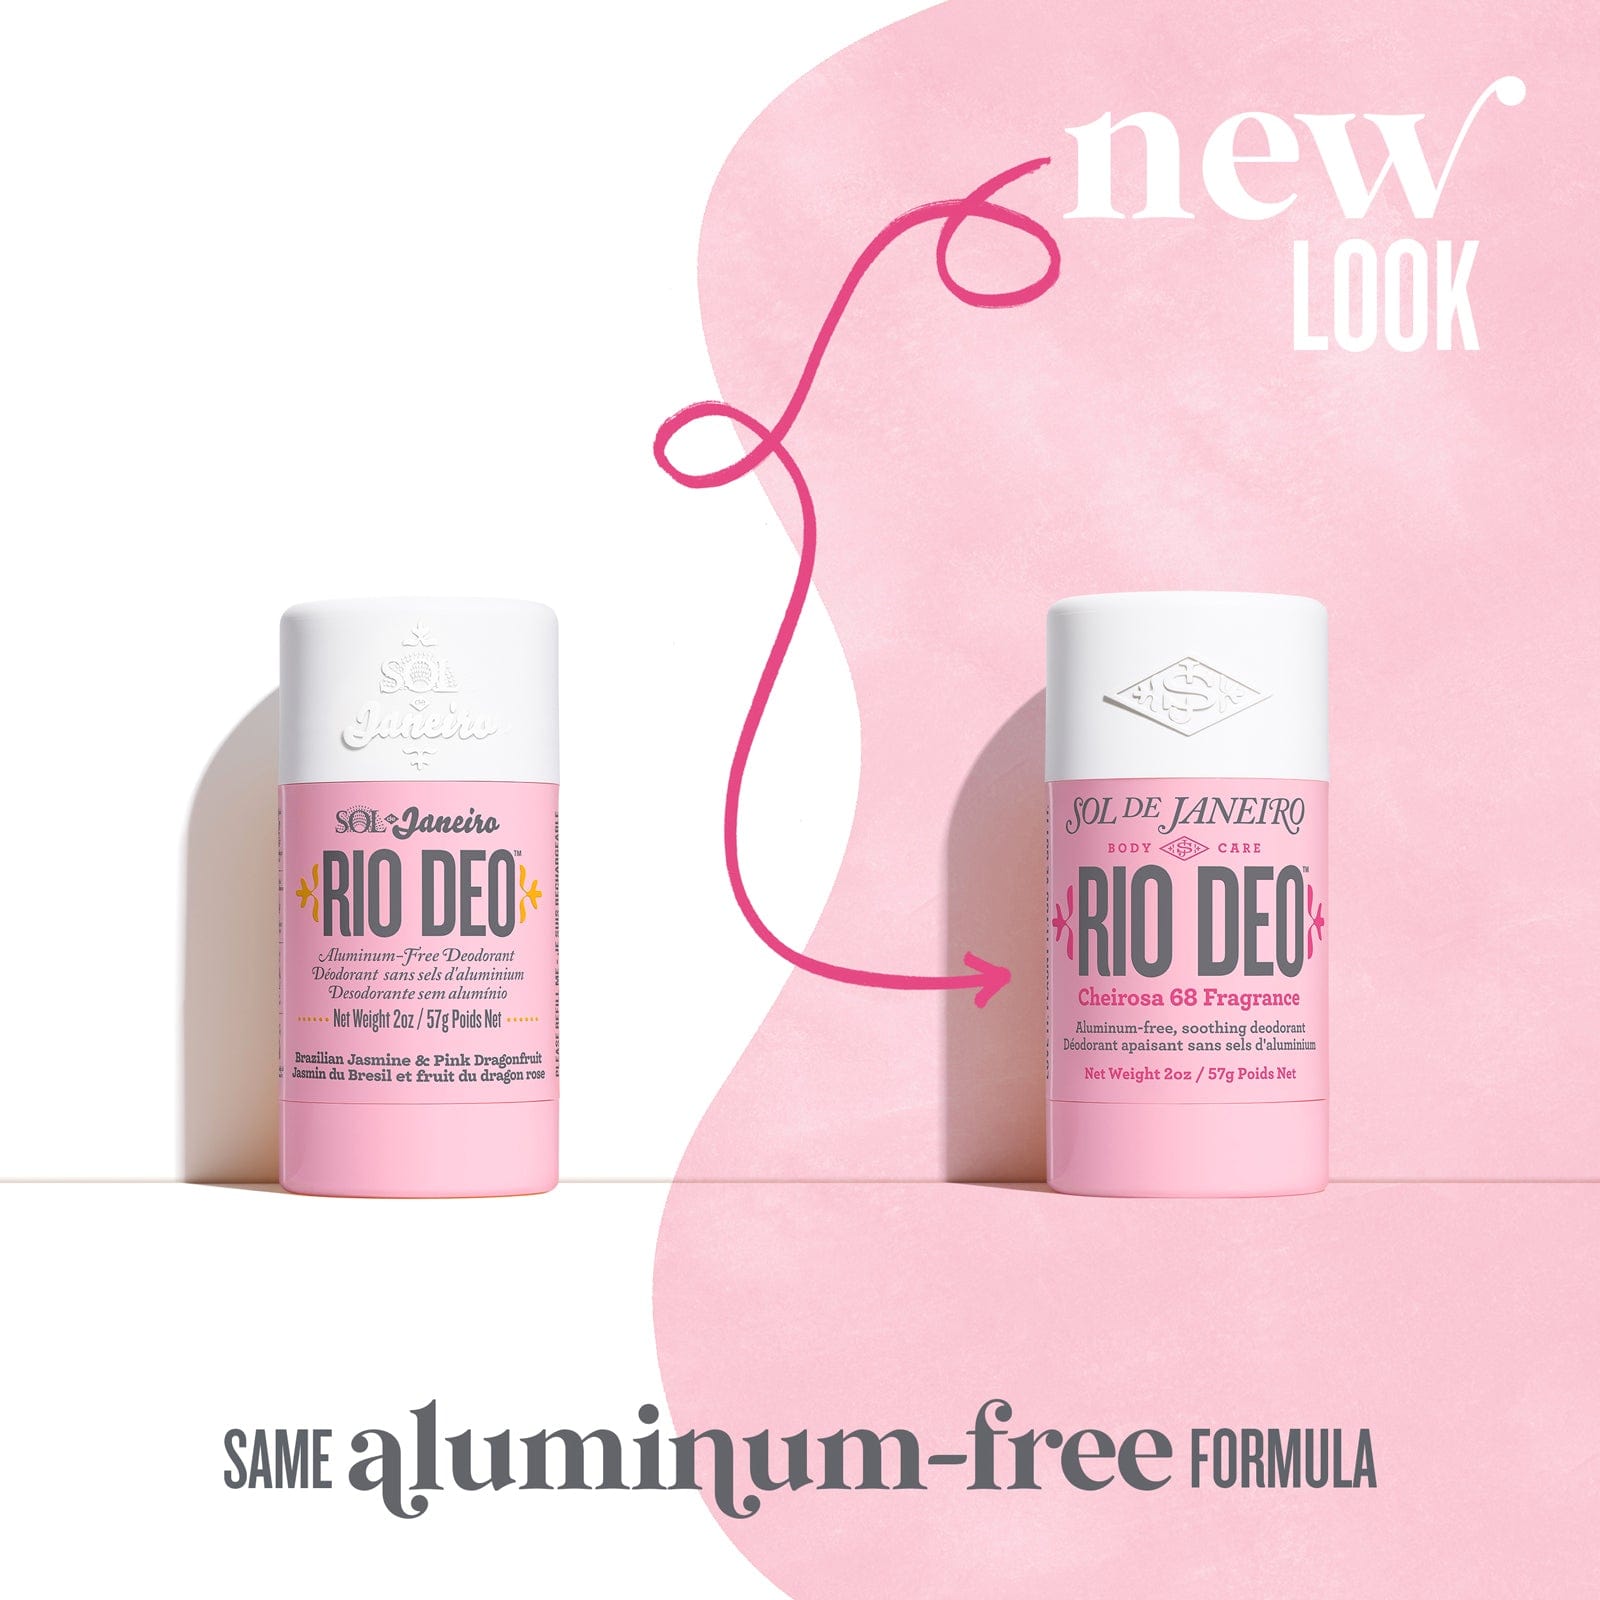 New Look - same aluminum-free formula 